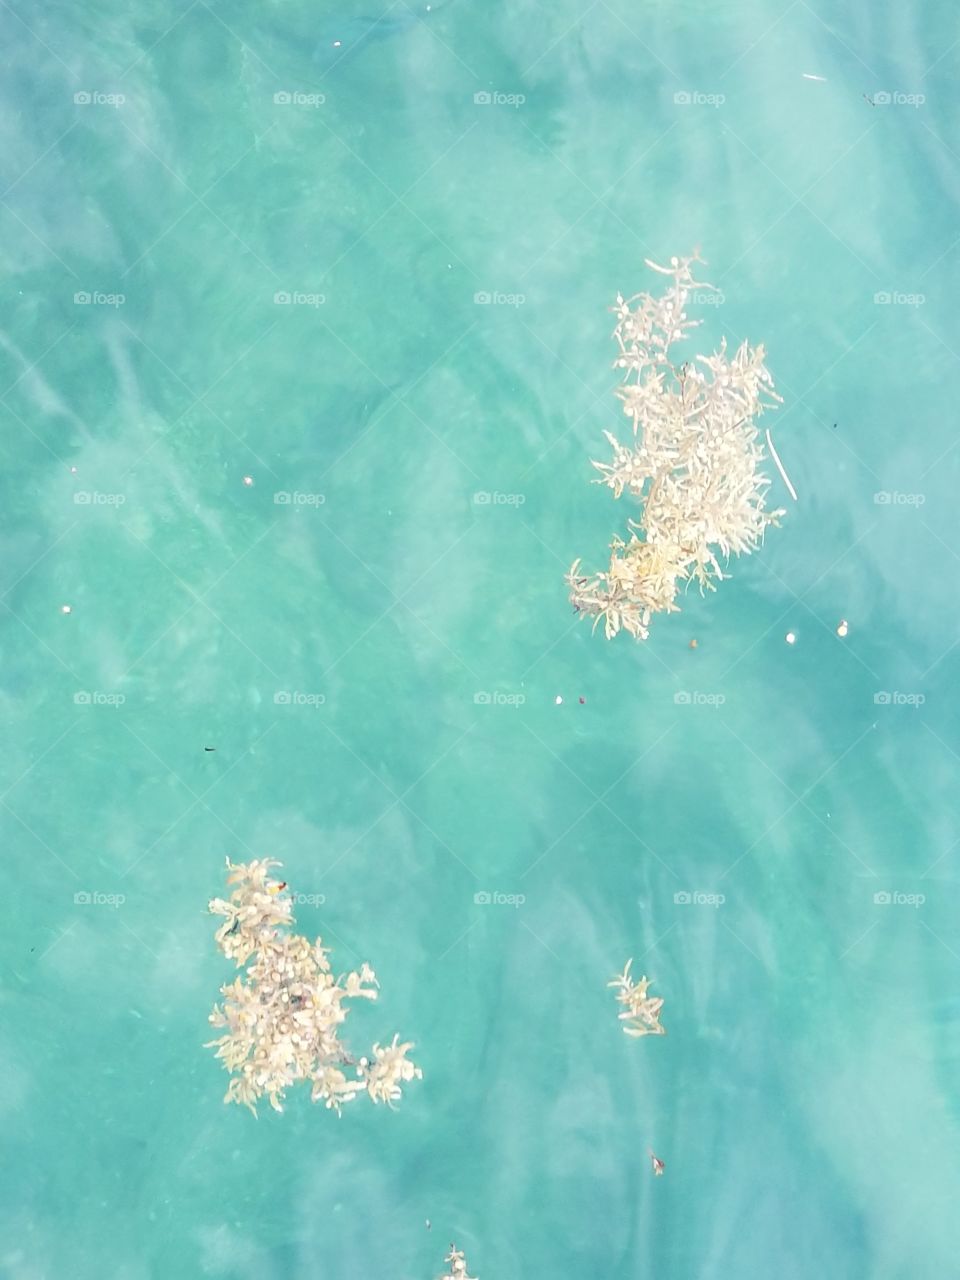 seaweed floating on the turquoise ocean water.